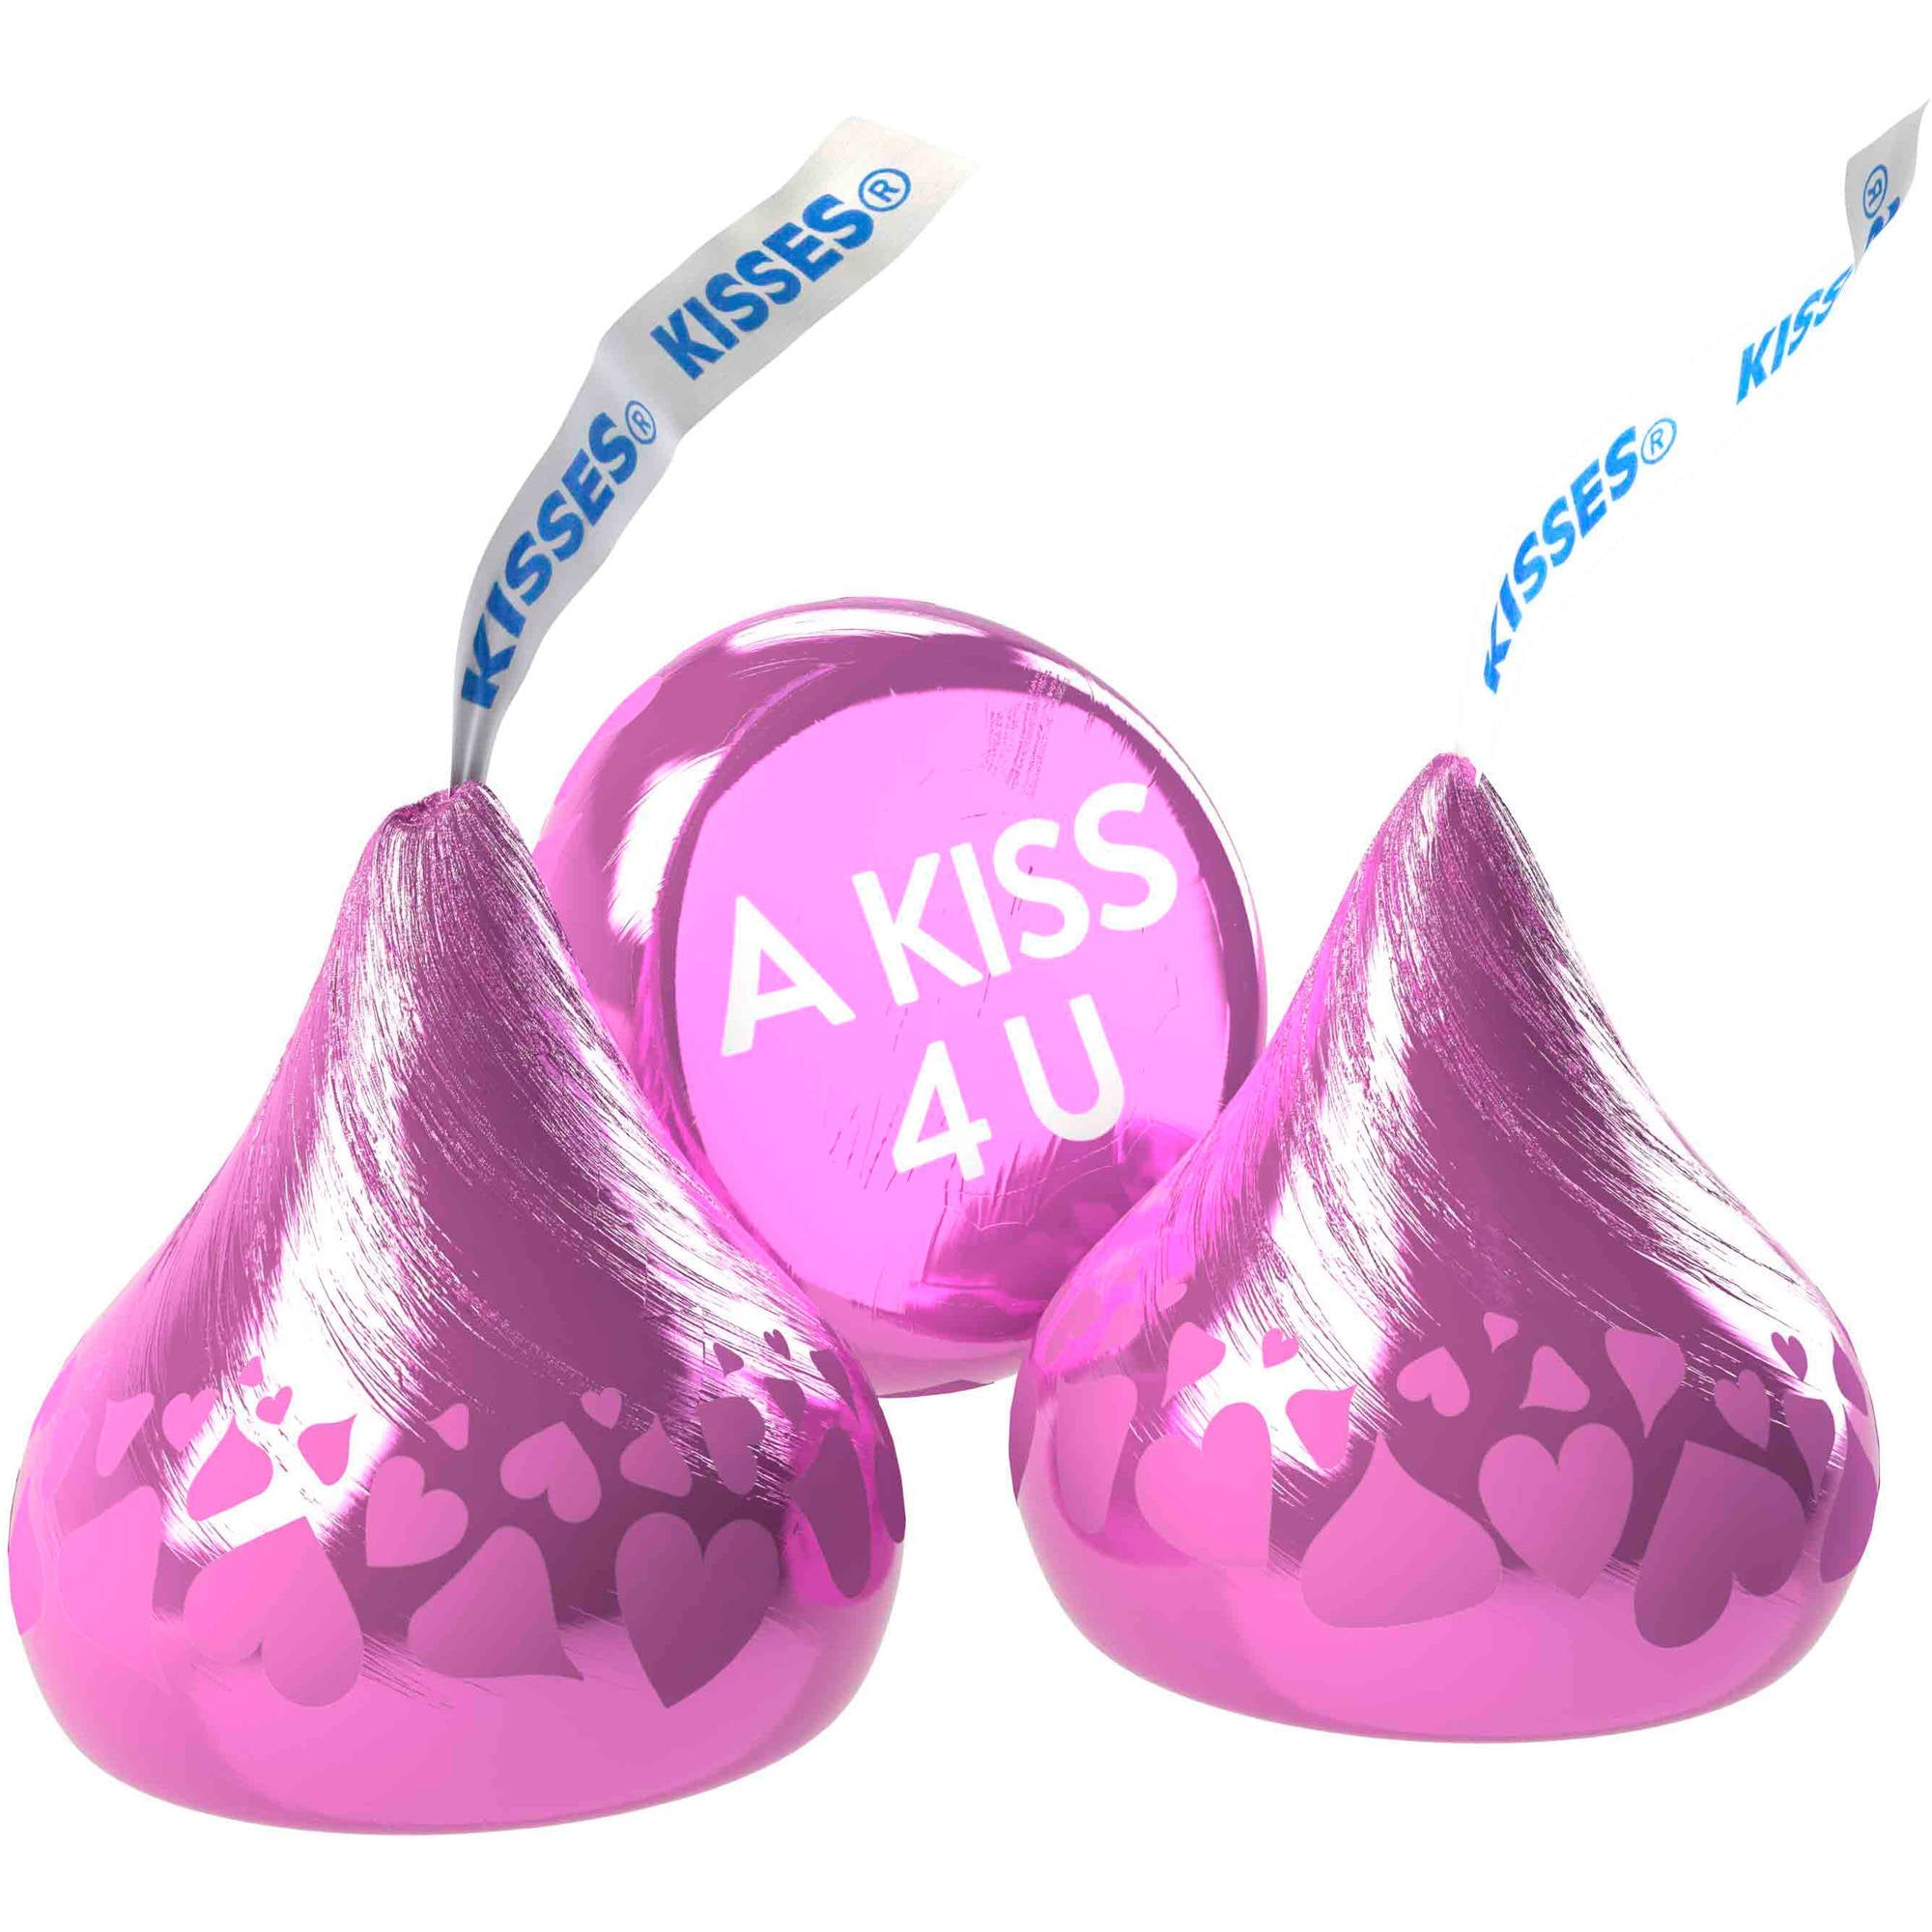 Hershey's Conversation Valentine's Kisses, 10.1oz